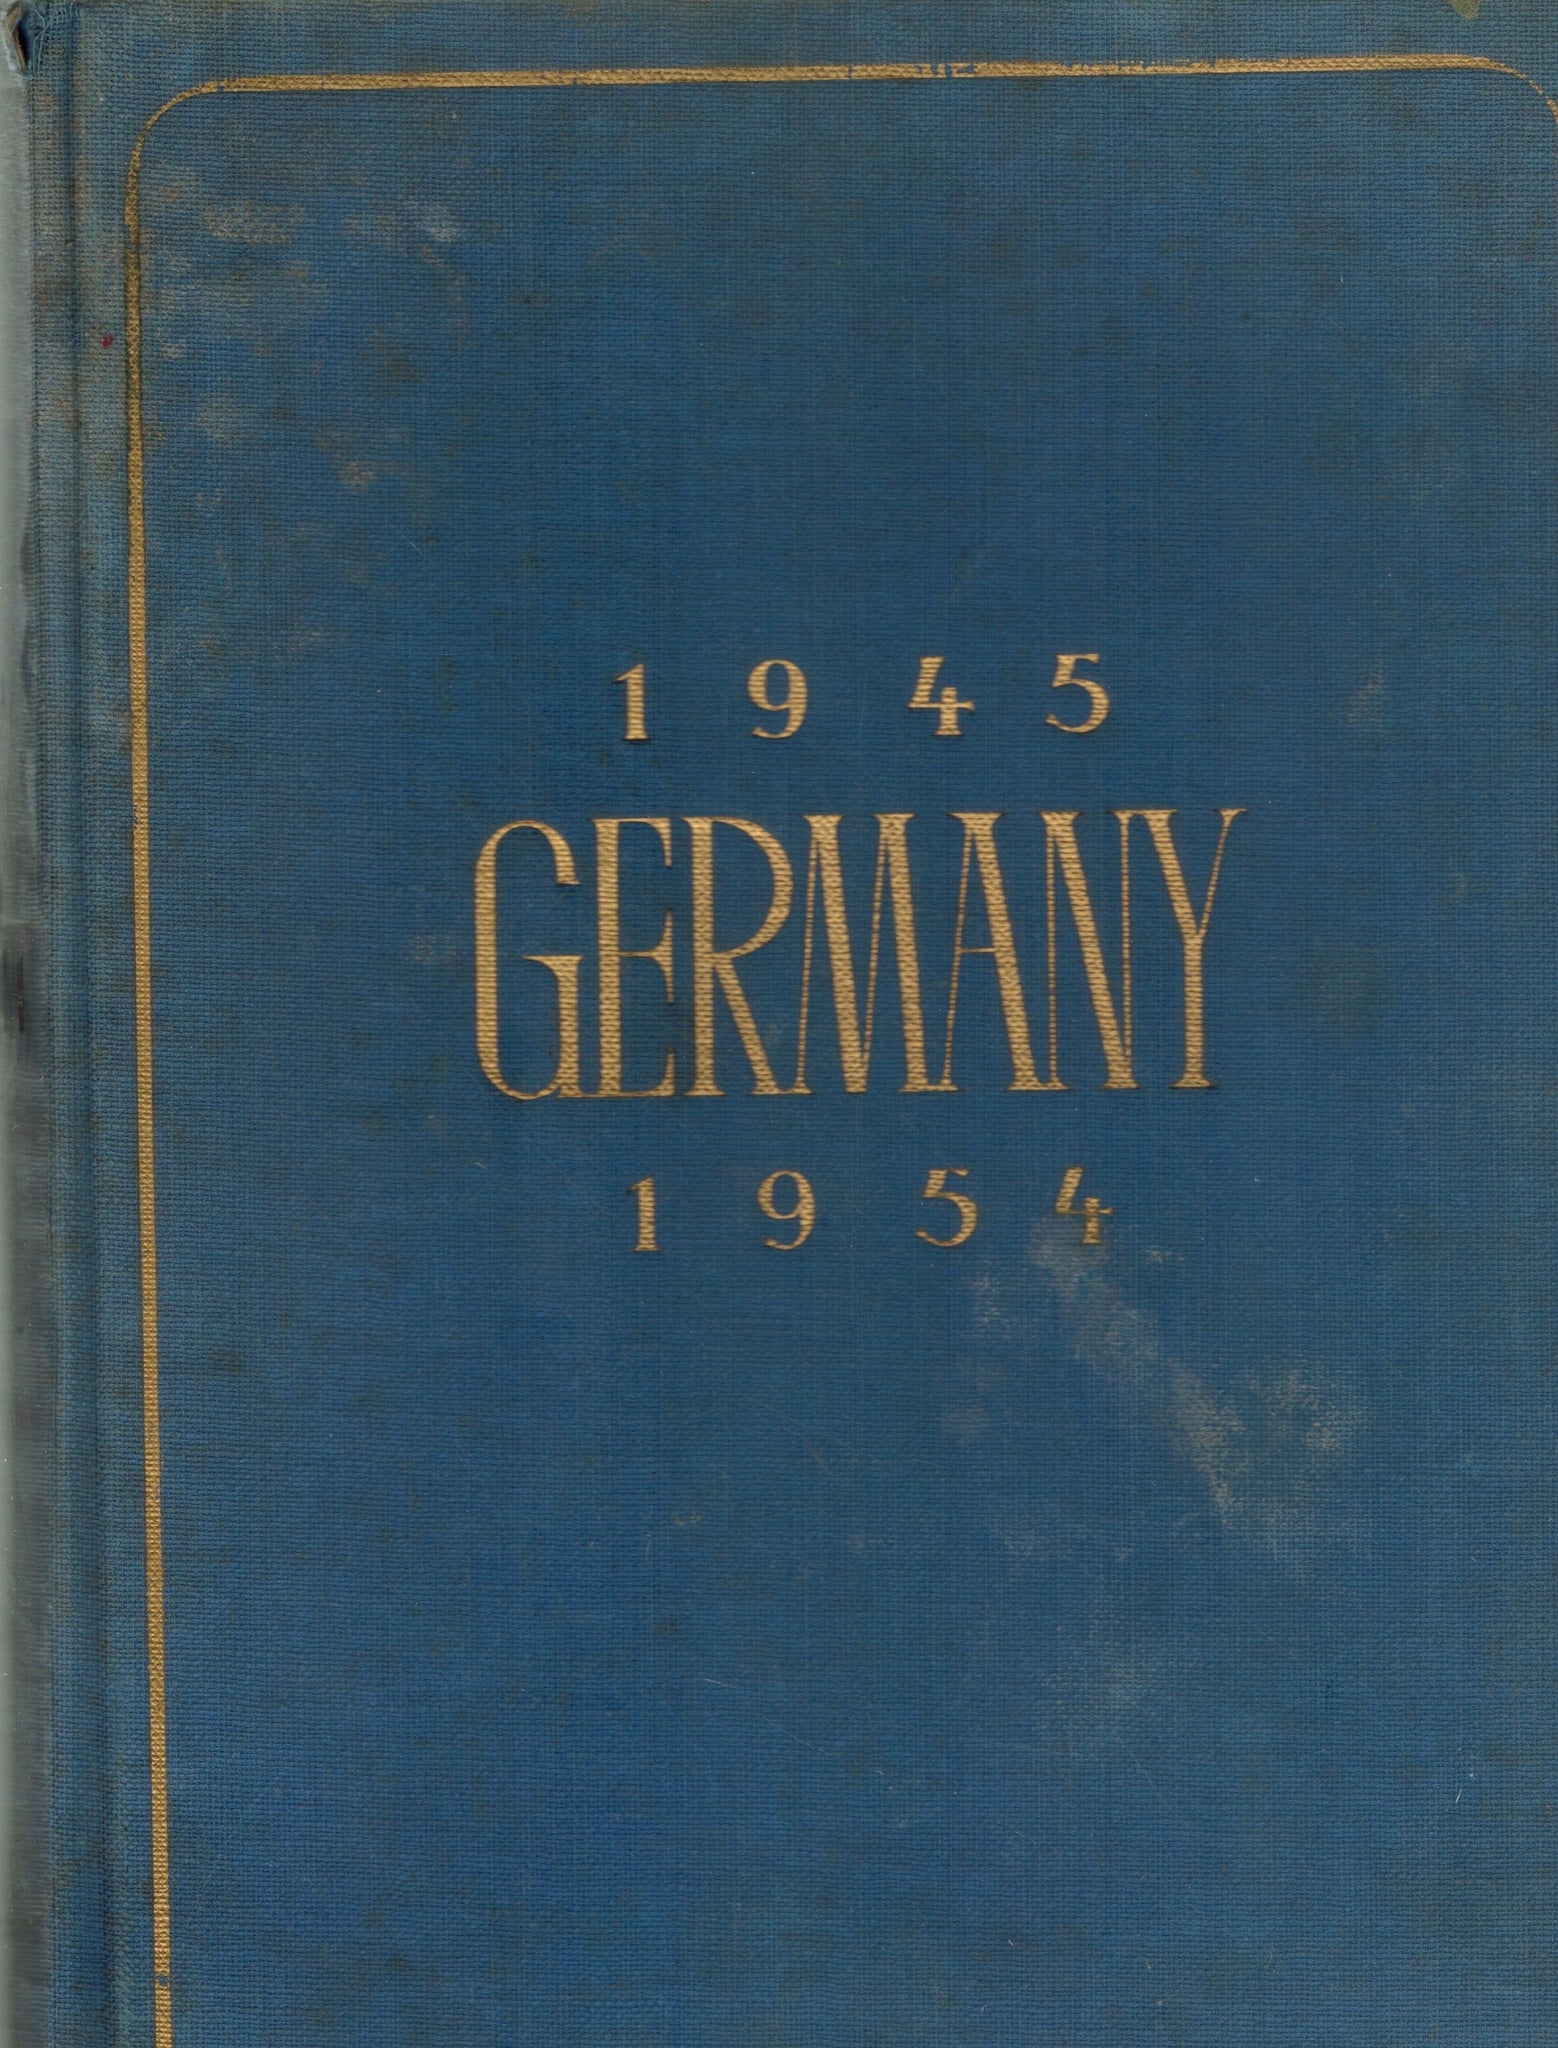 GERMANY 1945-1954